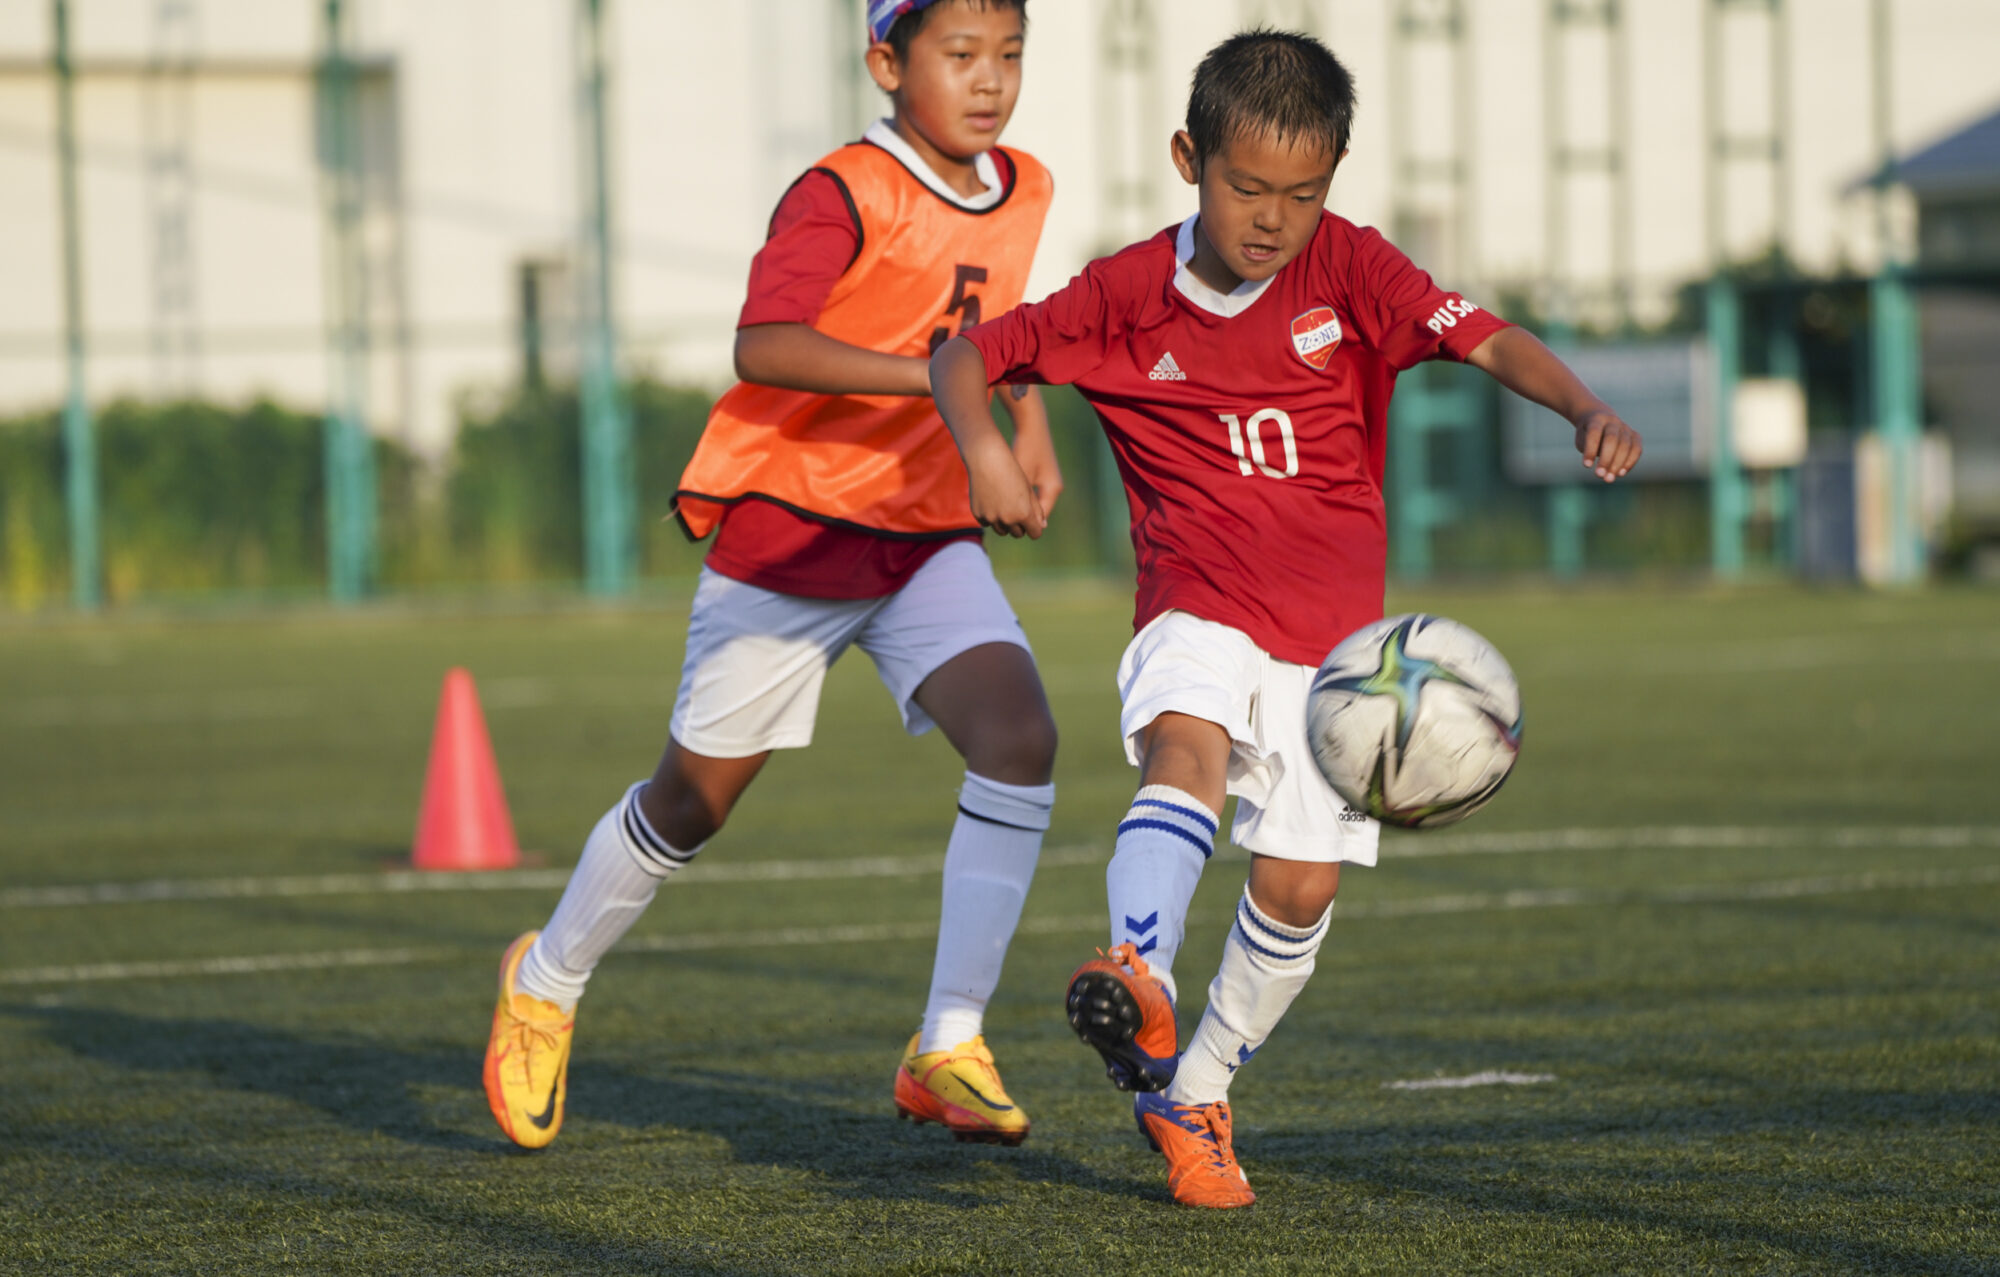 Zone Football Academyは 個の育成 に重点を置き 魅力ある選手を育成することを目的とし 基本技術